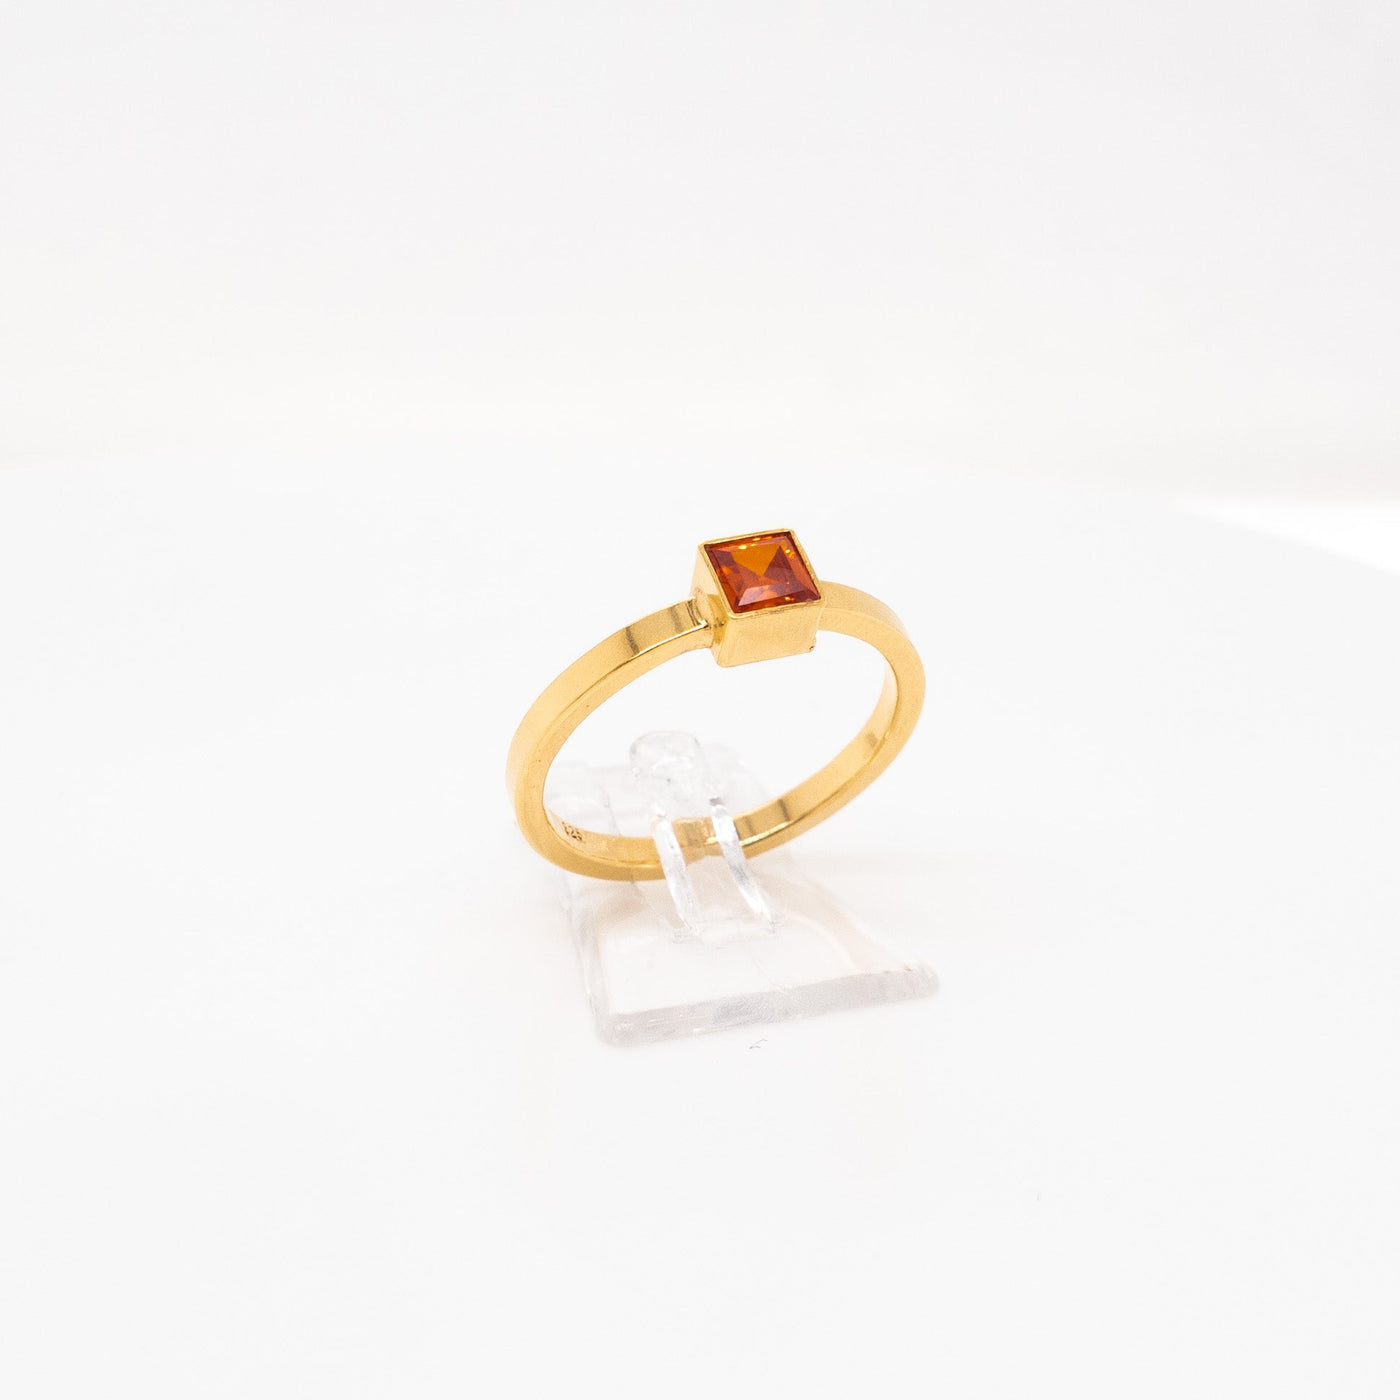 HELENA – Ring mit orangem Zirkonia